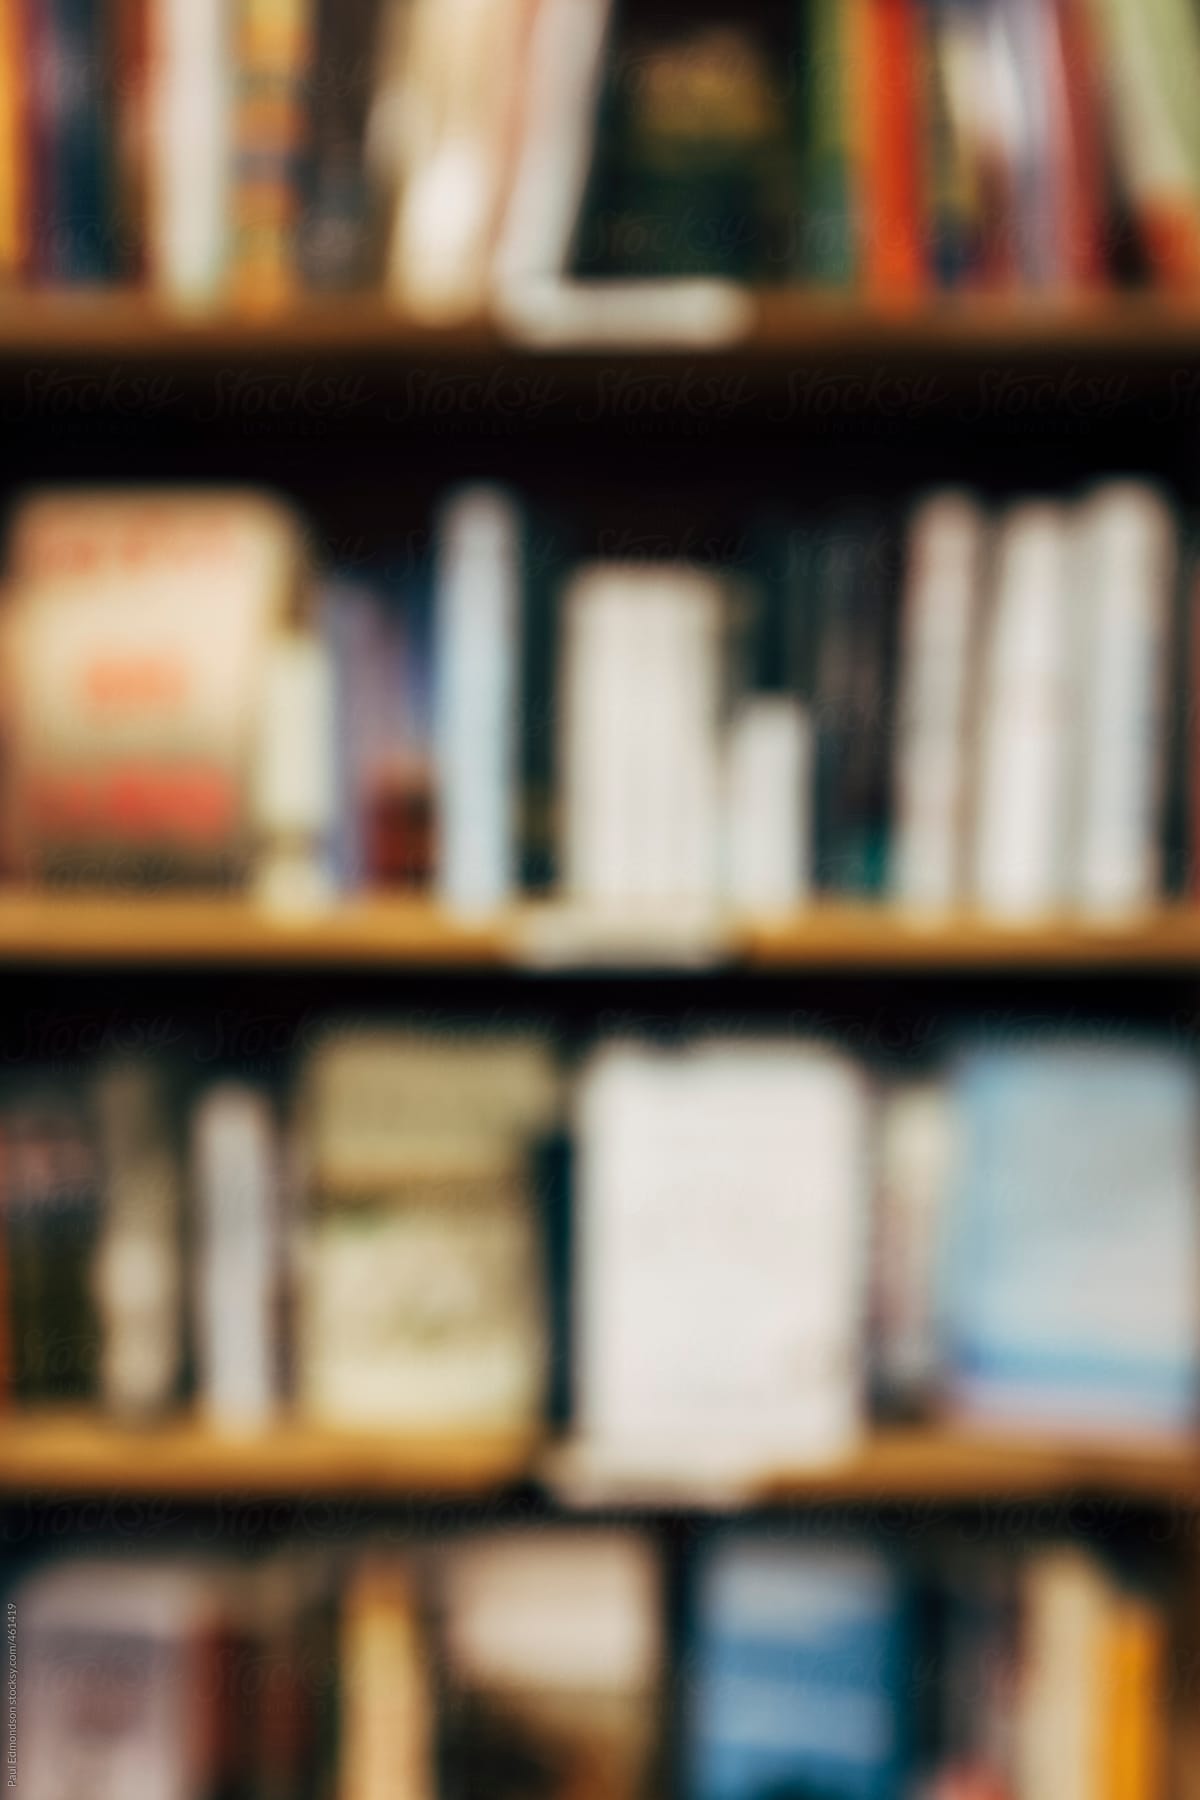 Row of books on bookshelves, blurred focus